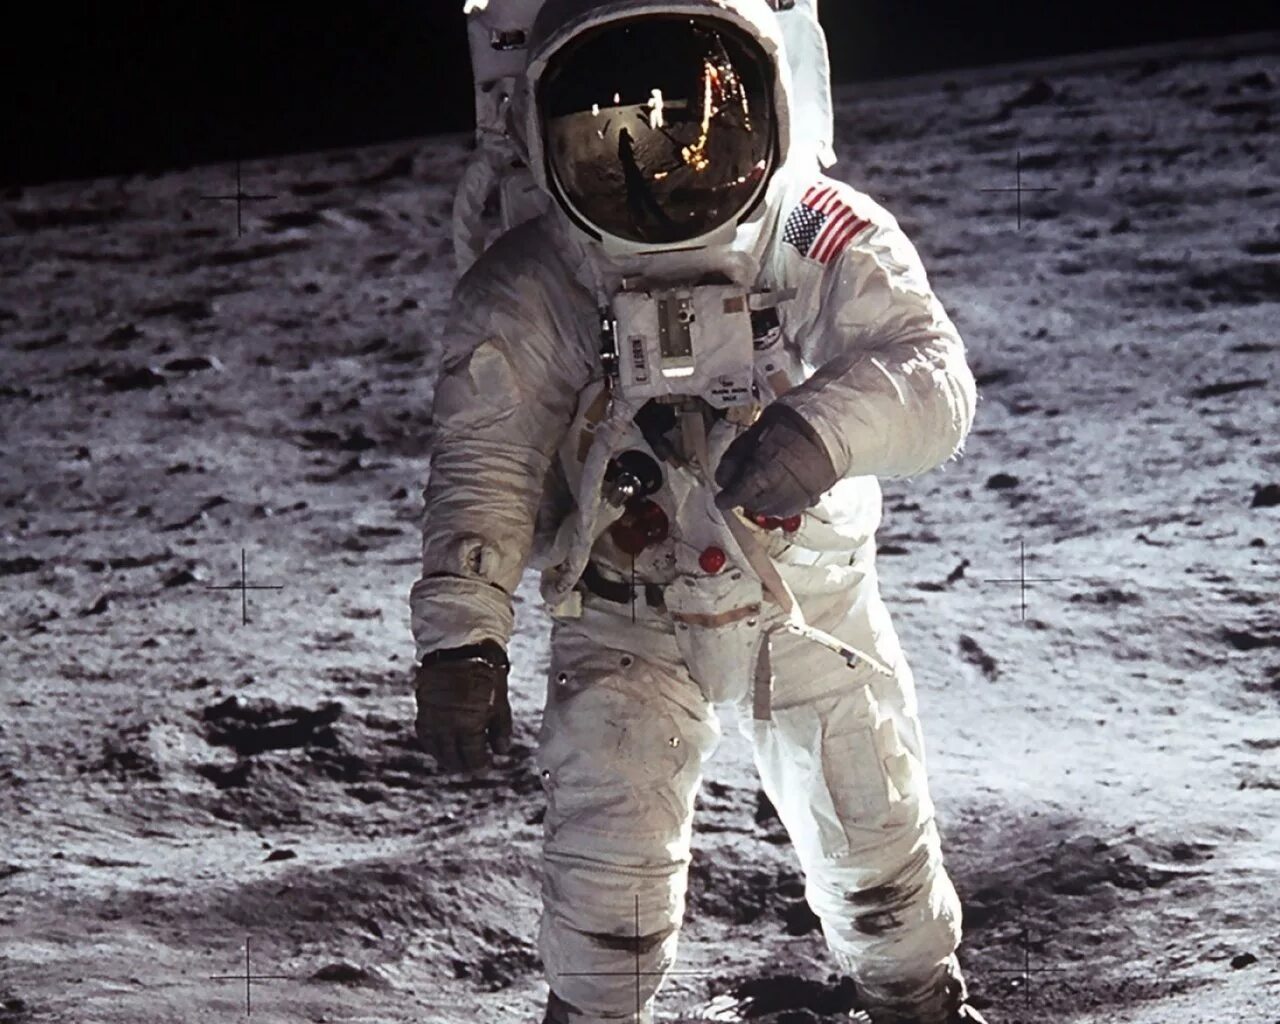 The moon travels. Скафандр Аполлон 11. Костюмы астронавтов Аполлон 11. Скафандр Космонавта. Космонавт на Луне.